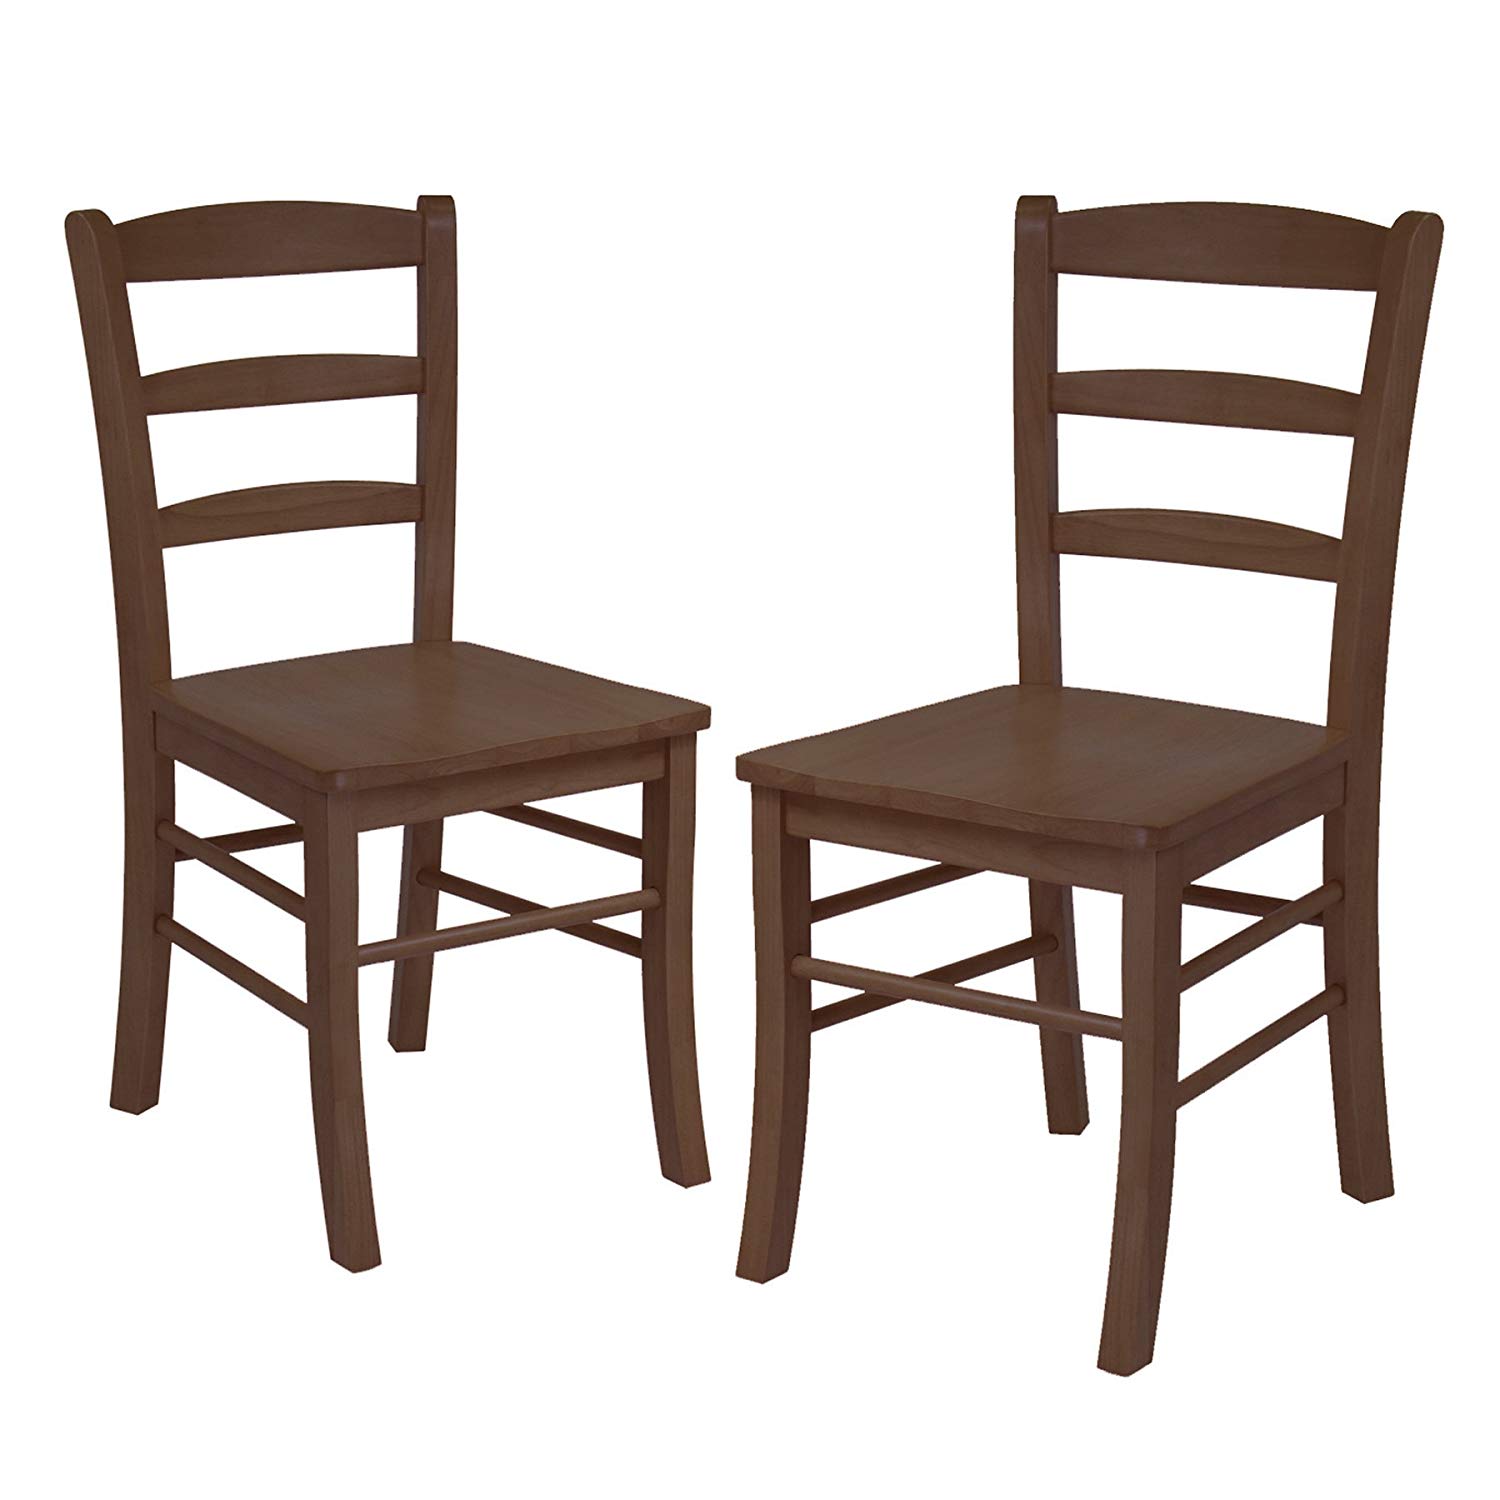 Amazon.com: Winsome Wood Ladder Back Chair, Light Oak, Set of 2 ...